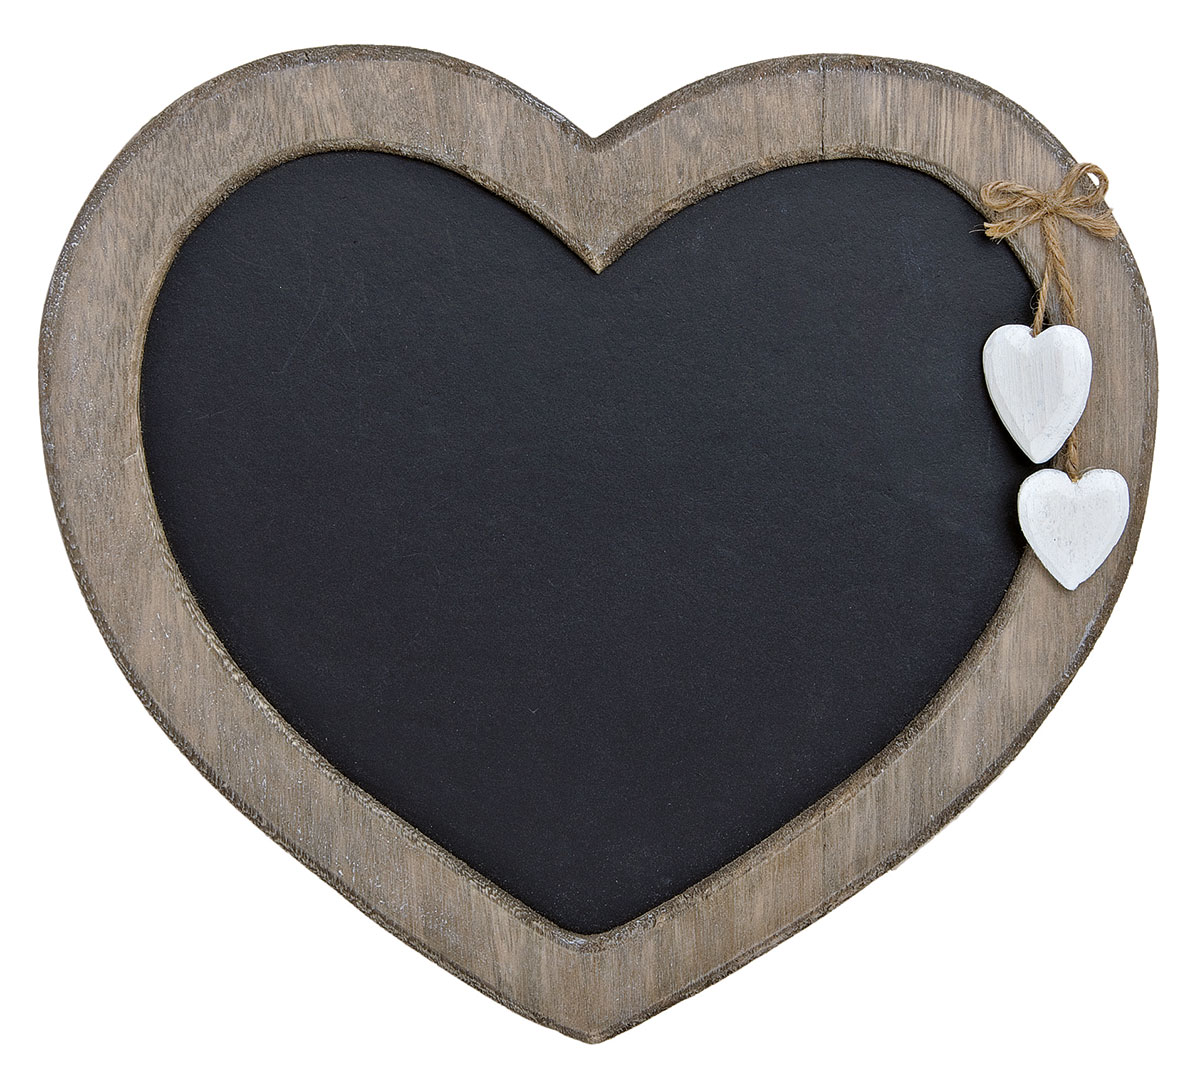 Memotafel Tafel Wandtafel Herz zum Hängen Holz Vintage Shabby Kreide